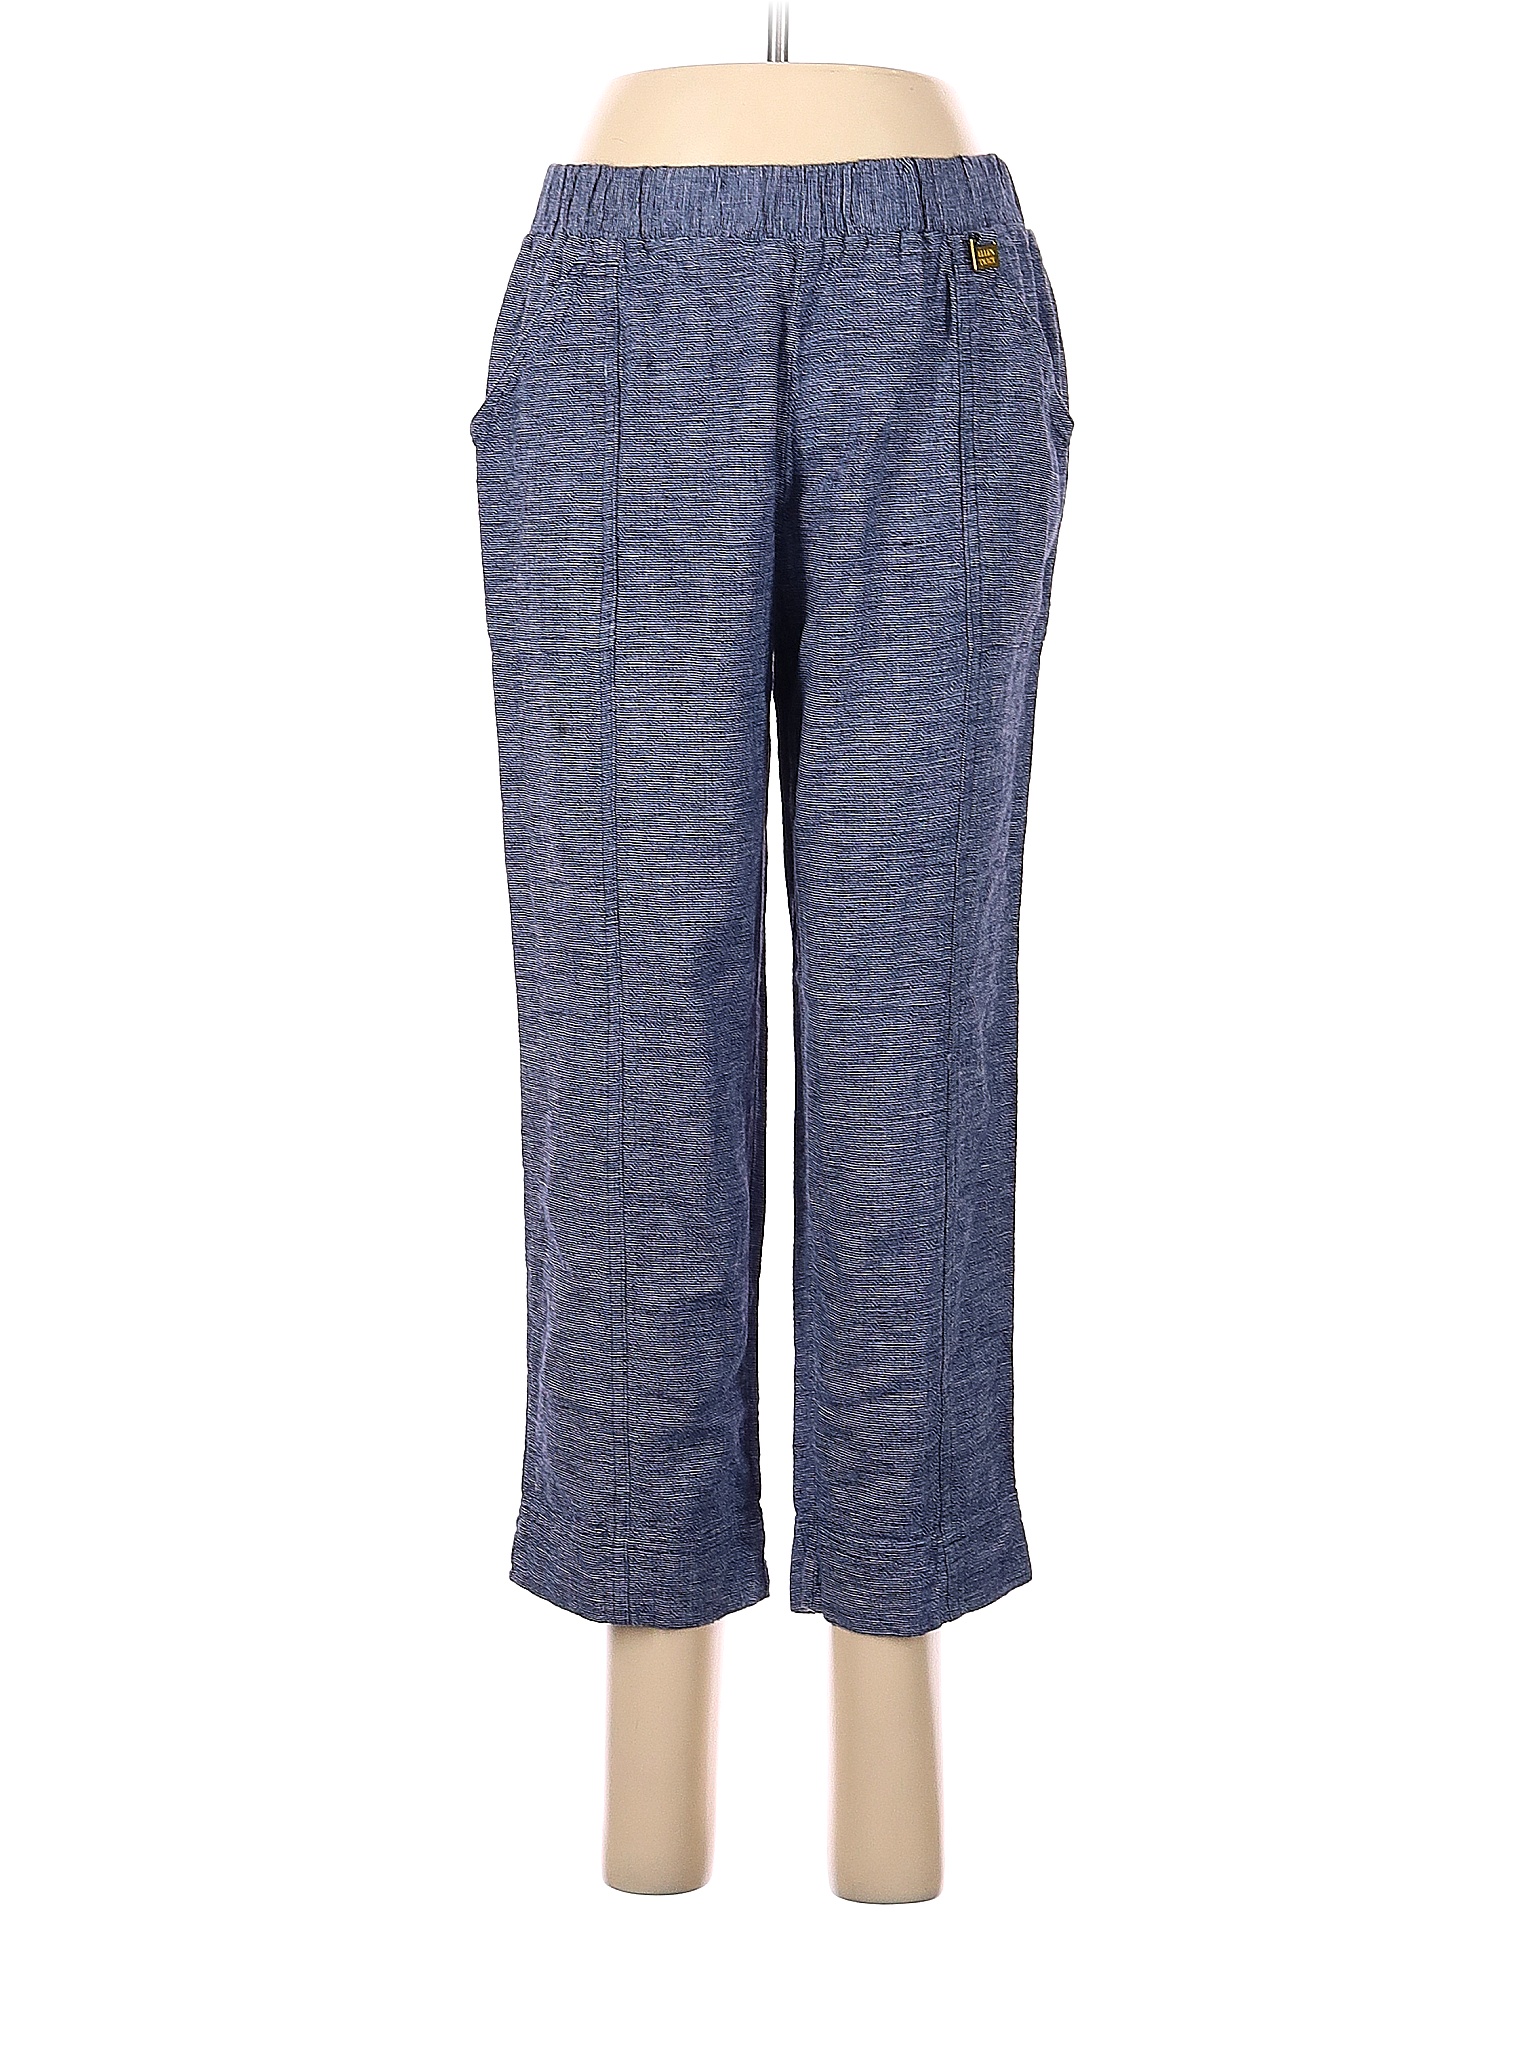 Ellen Tracy Blue Linen Pants Size S - 77% off | thredUP